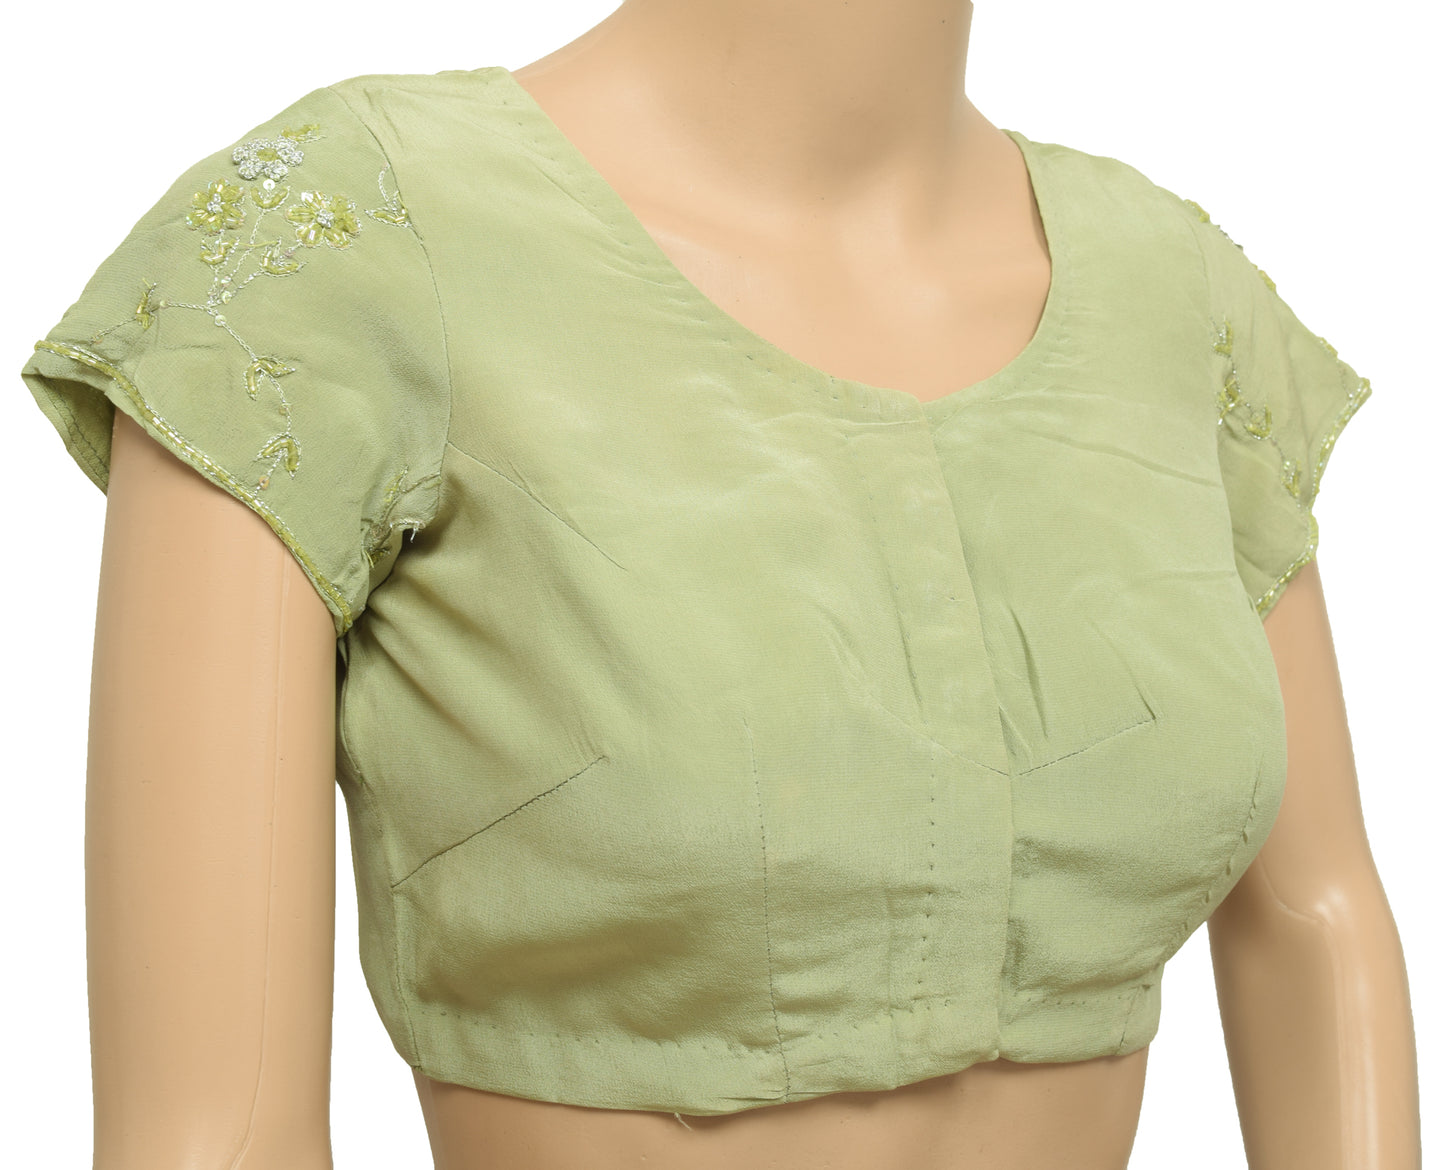 Sushila Vintage Celadon Green Stitched Sari Blouse Crepe Embroidered Floral Top